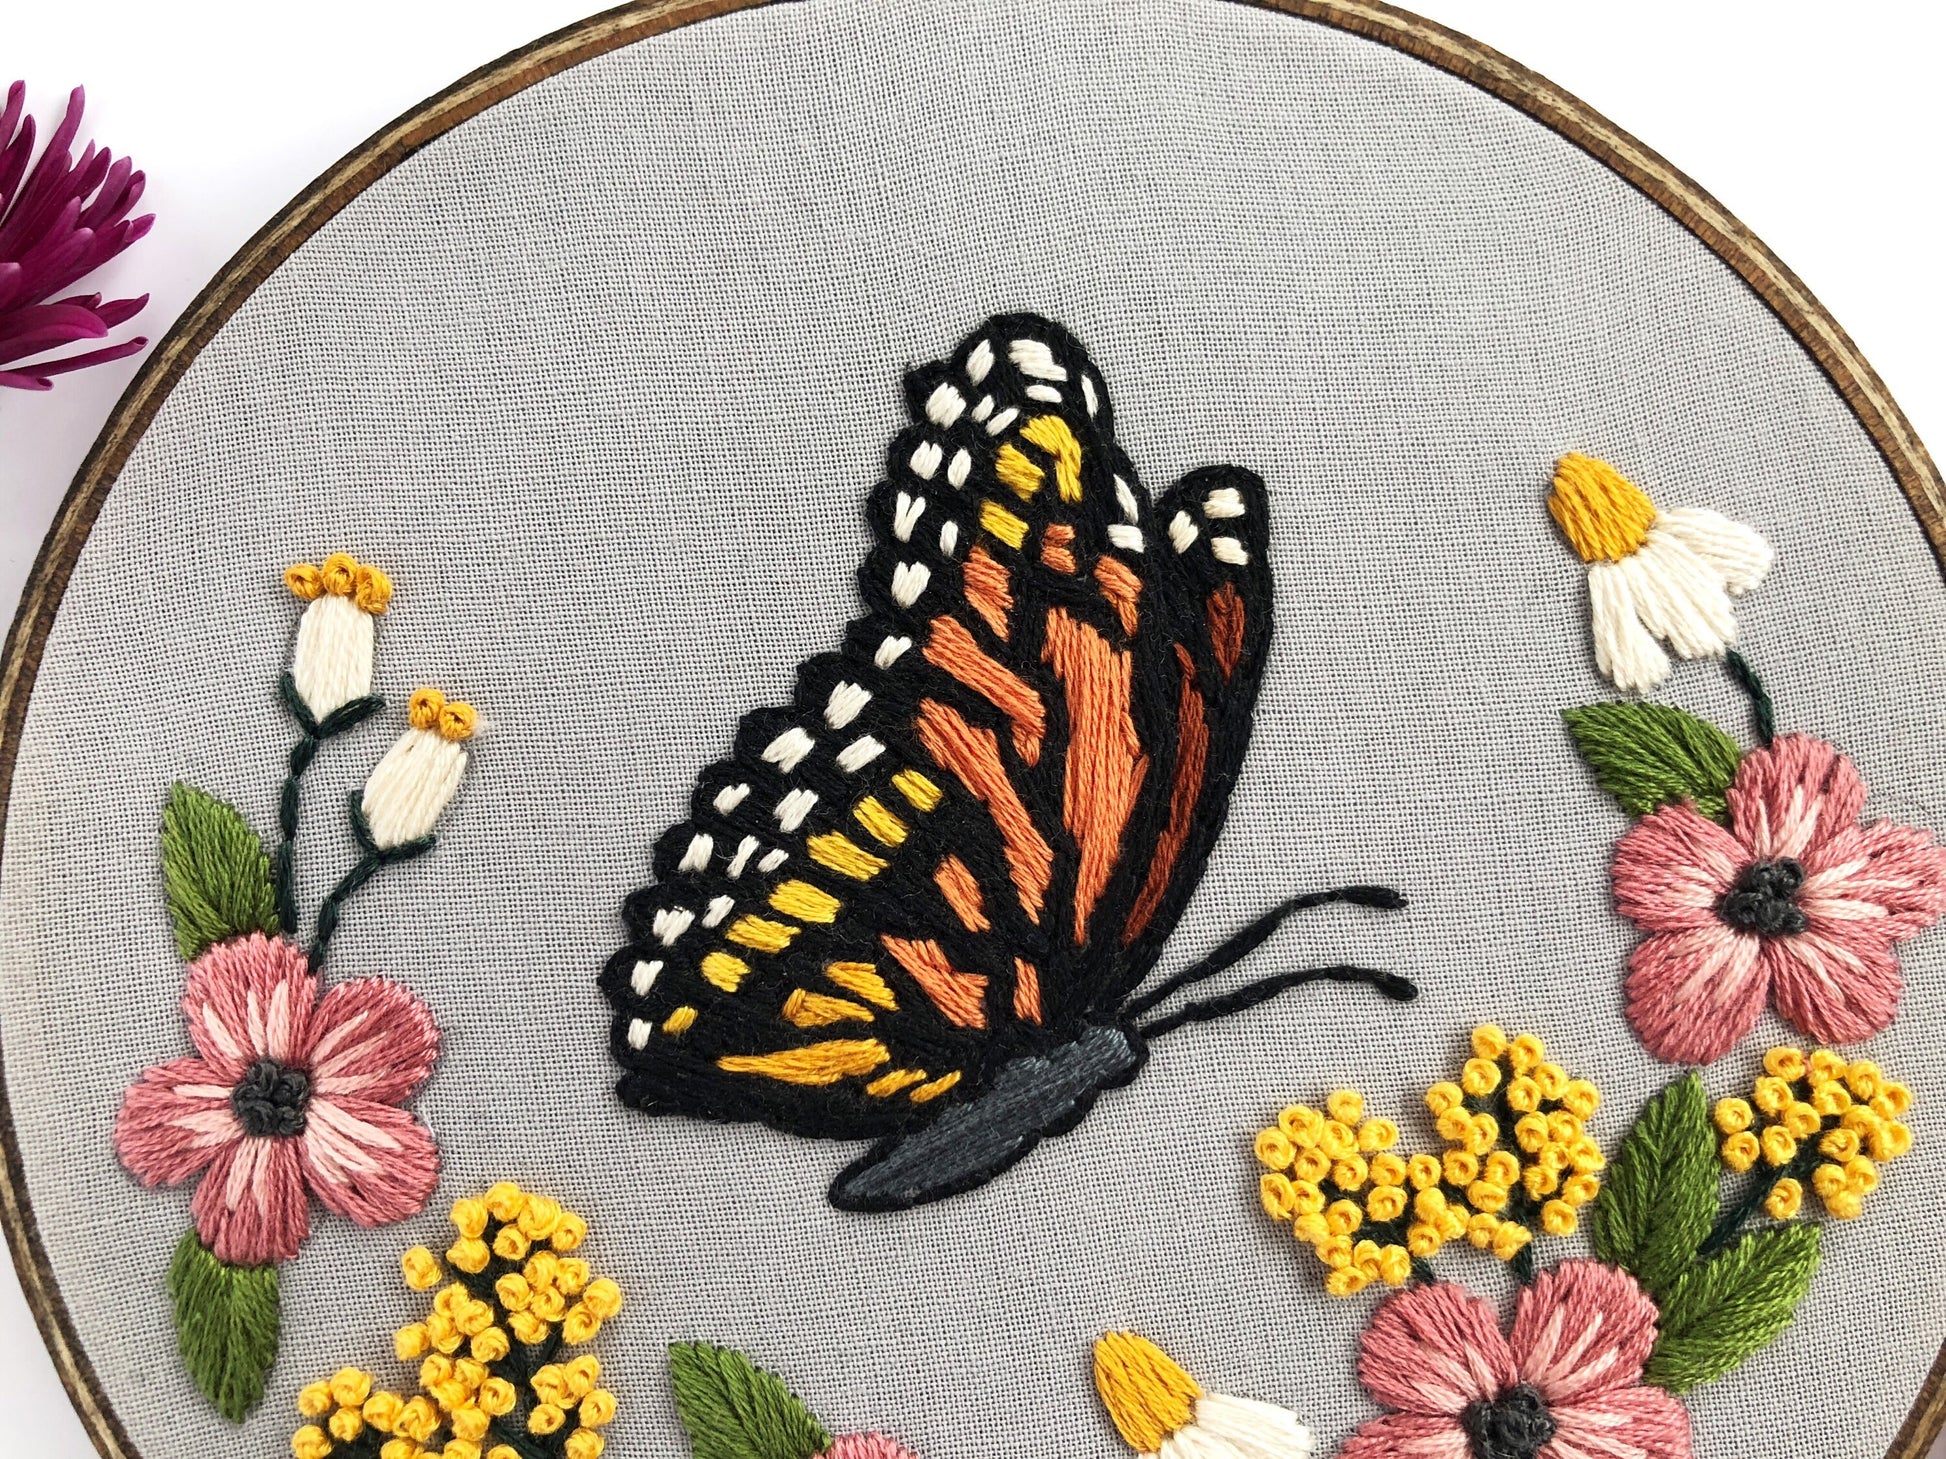 Monarch Butterfly Embroidery Pattern. Beginner Embroidery pattern. PDF embroidery pattern. 6" embroidery hoop. DIY decor. Modern embroidery